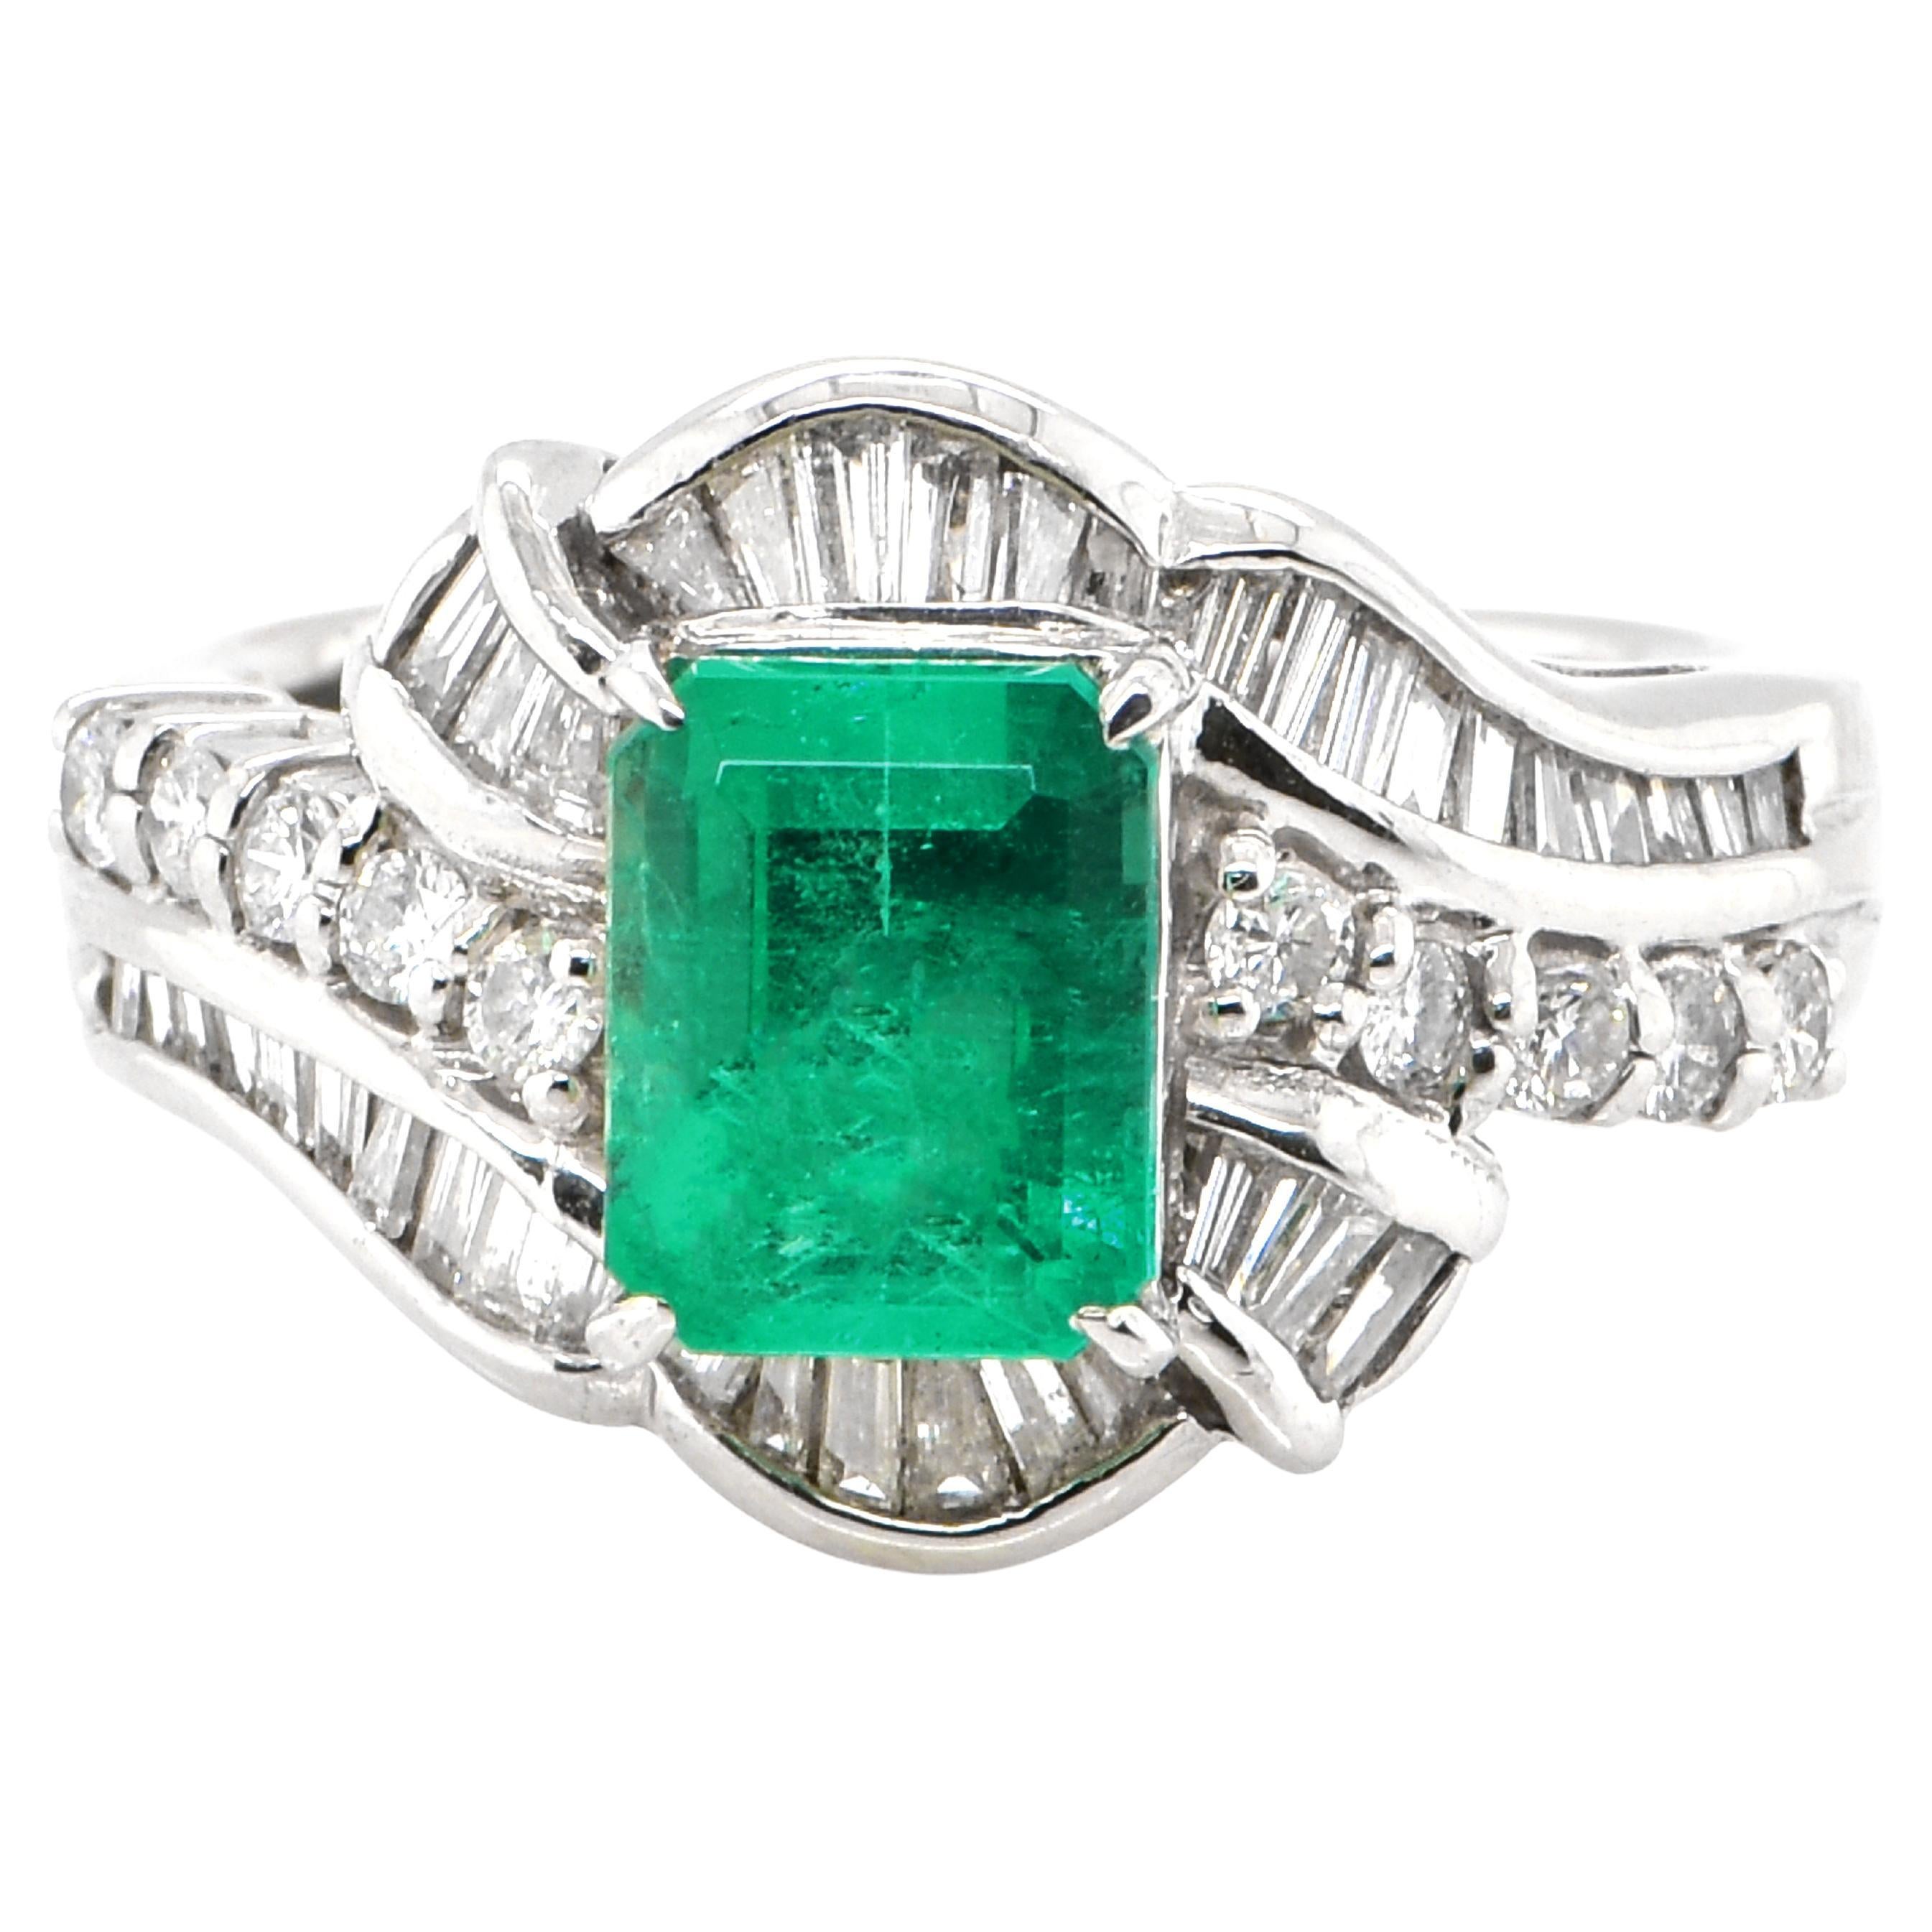 1.83 Carat Natural Emerald & Diamond Estate Cocktail Ring Made in Platinum